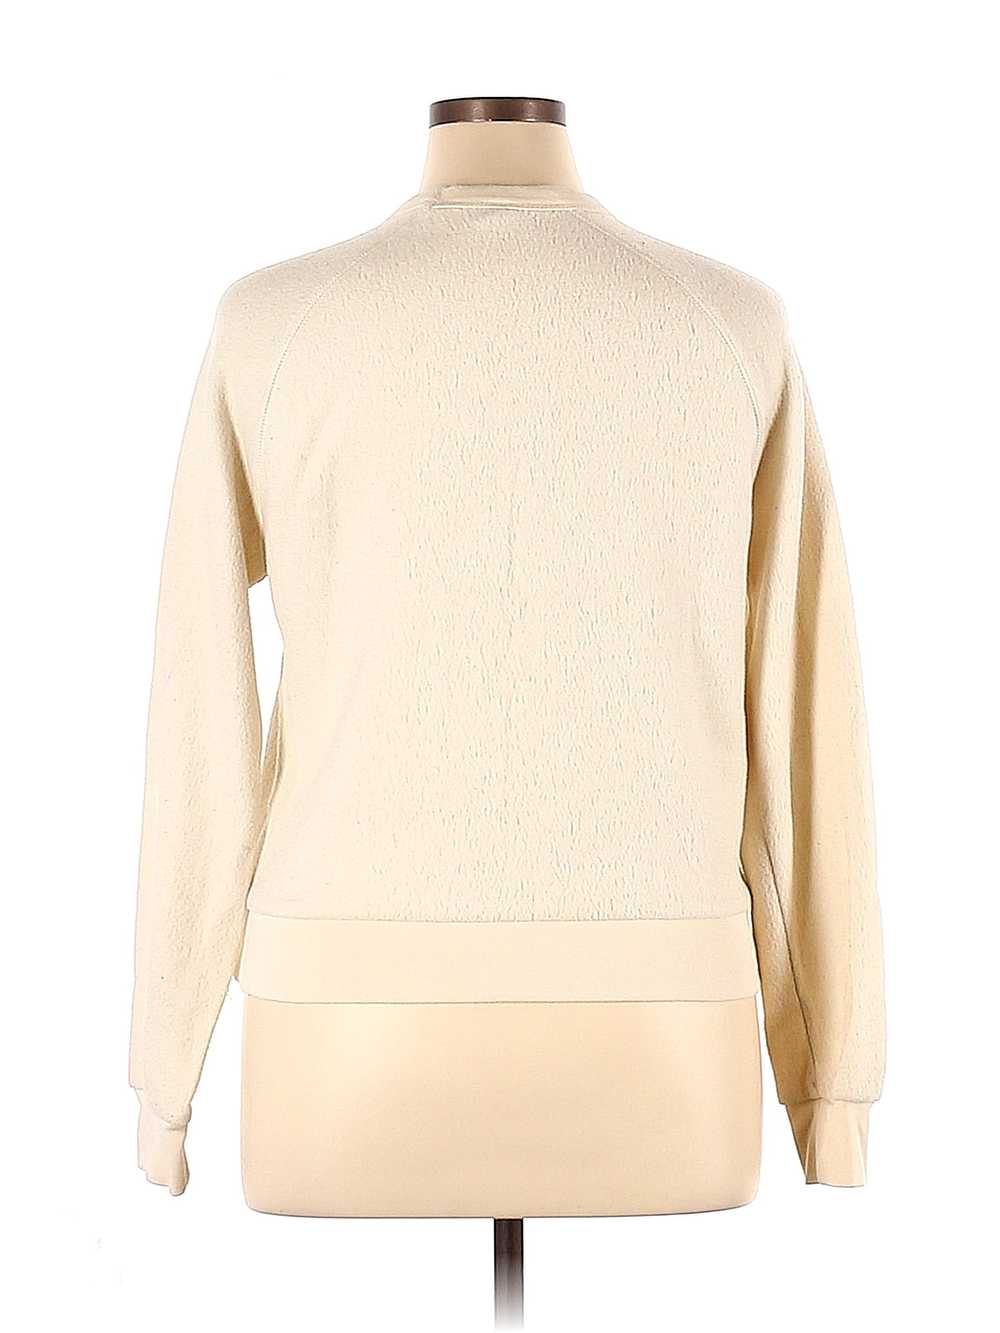 ALTERNATIVE Women Ivory Sweatshirt XL - image 2